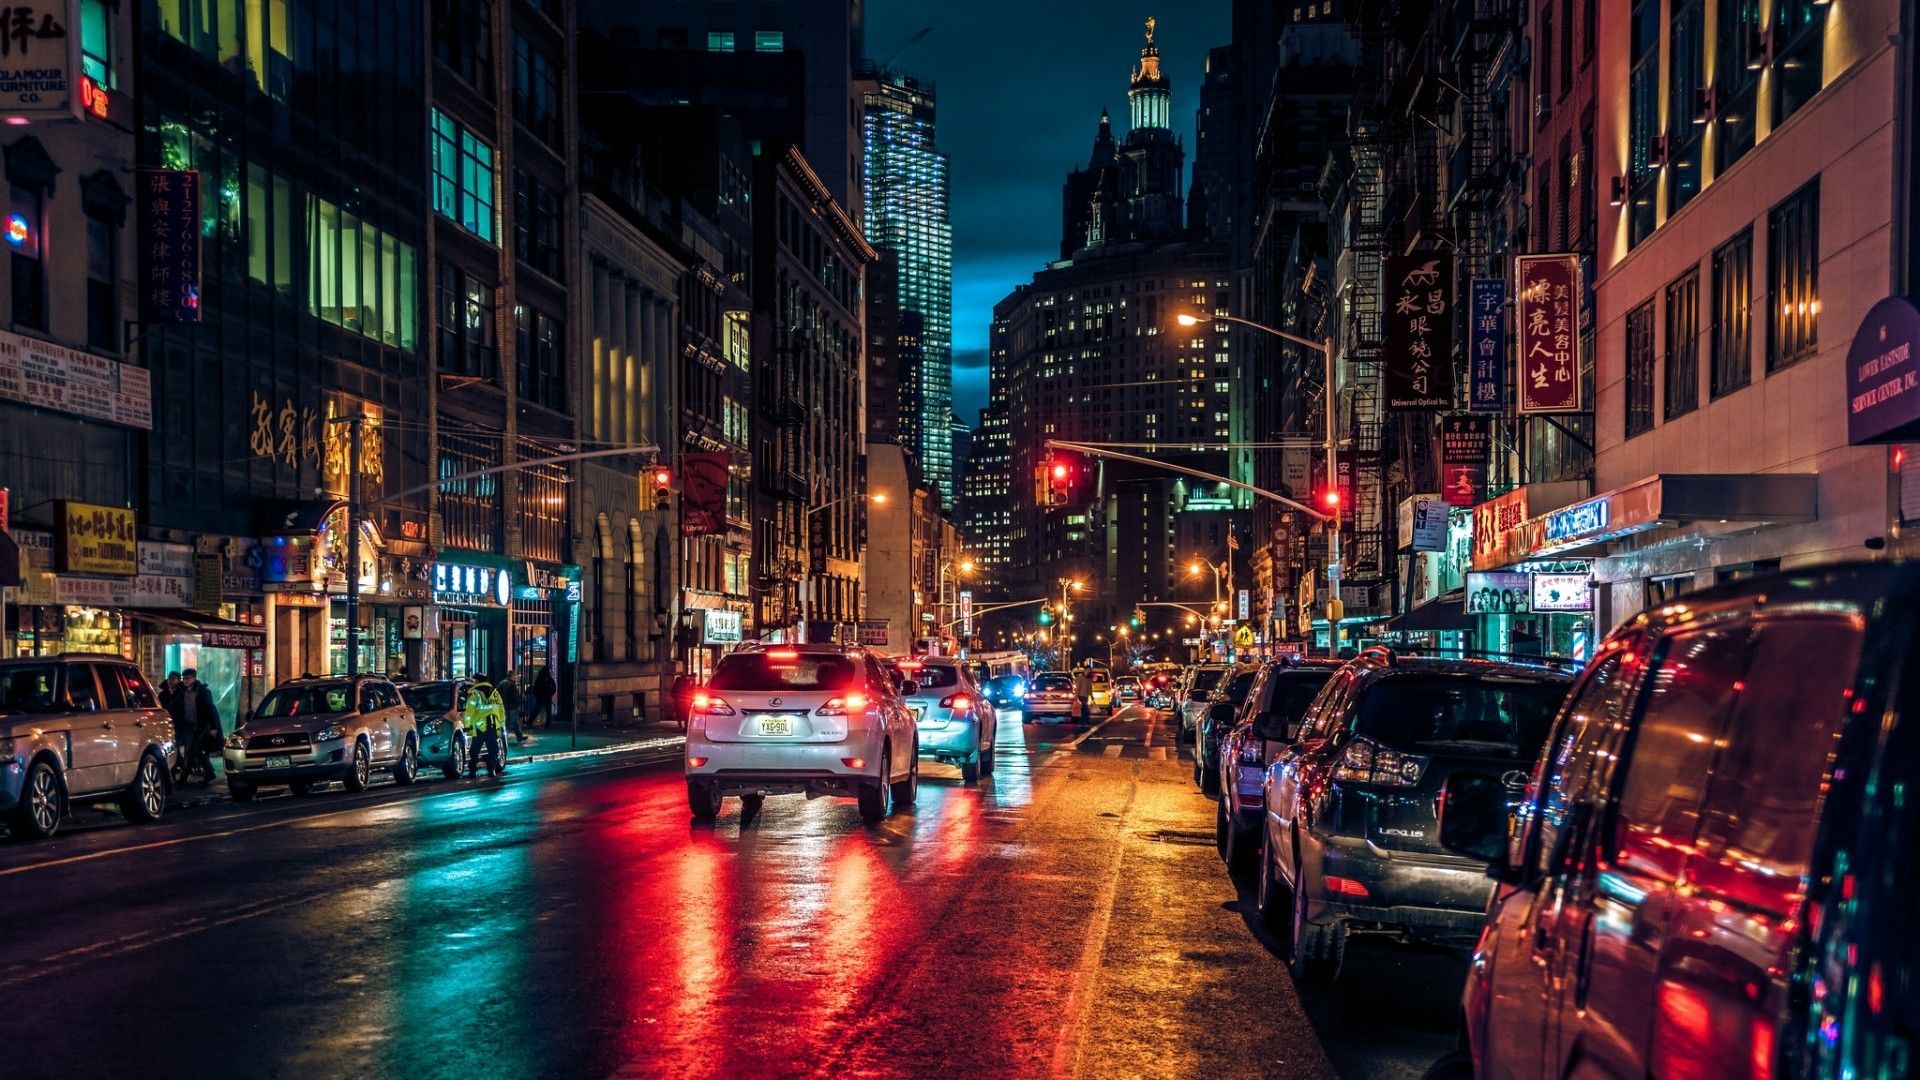 New York City Streets At Night Wallpapers 4k Hd New York City Streets At Night Backgrounds On 0588